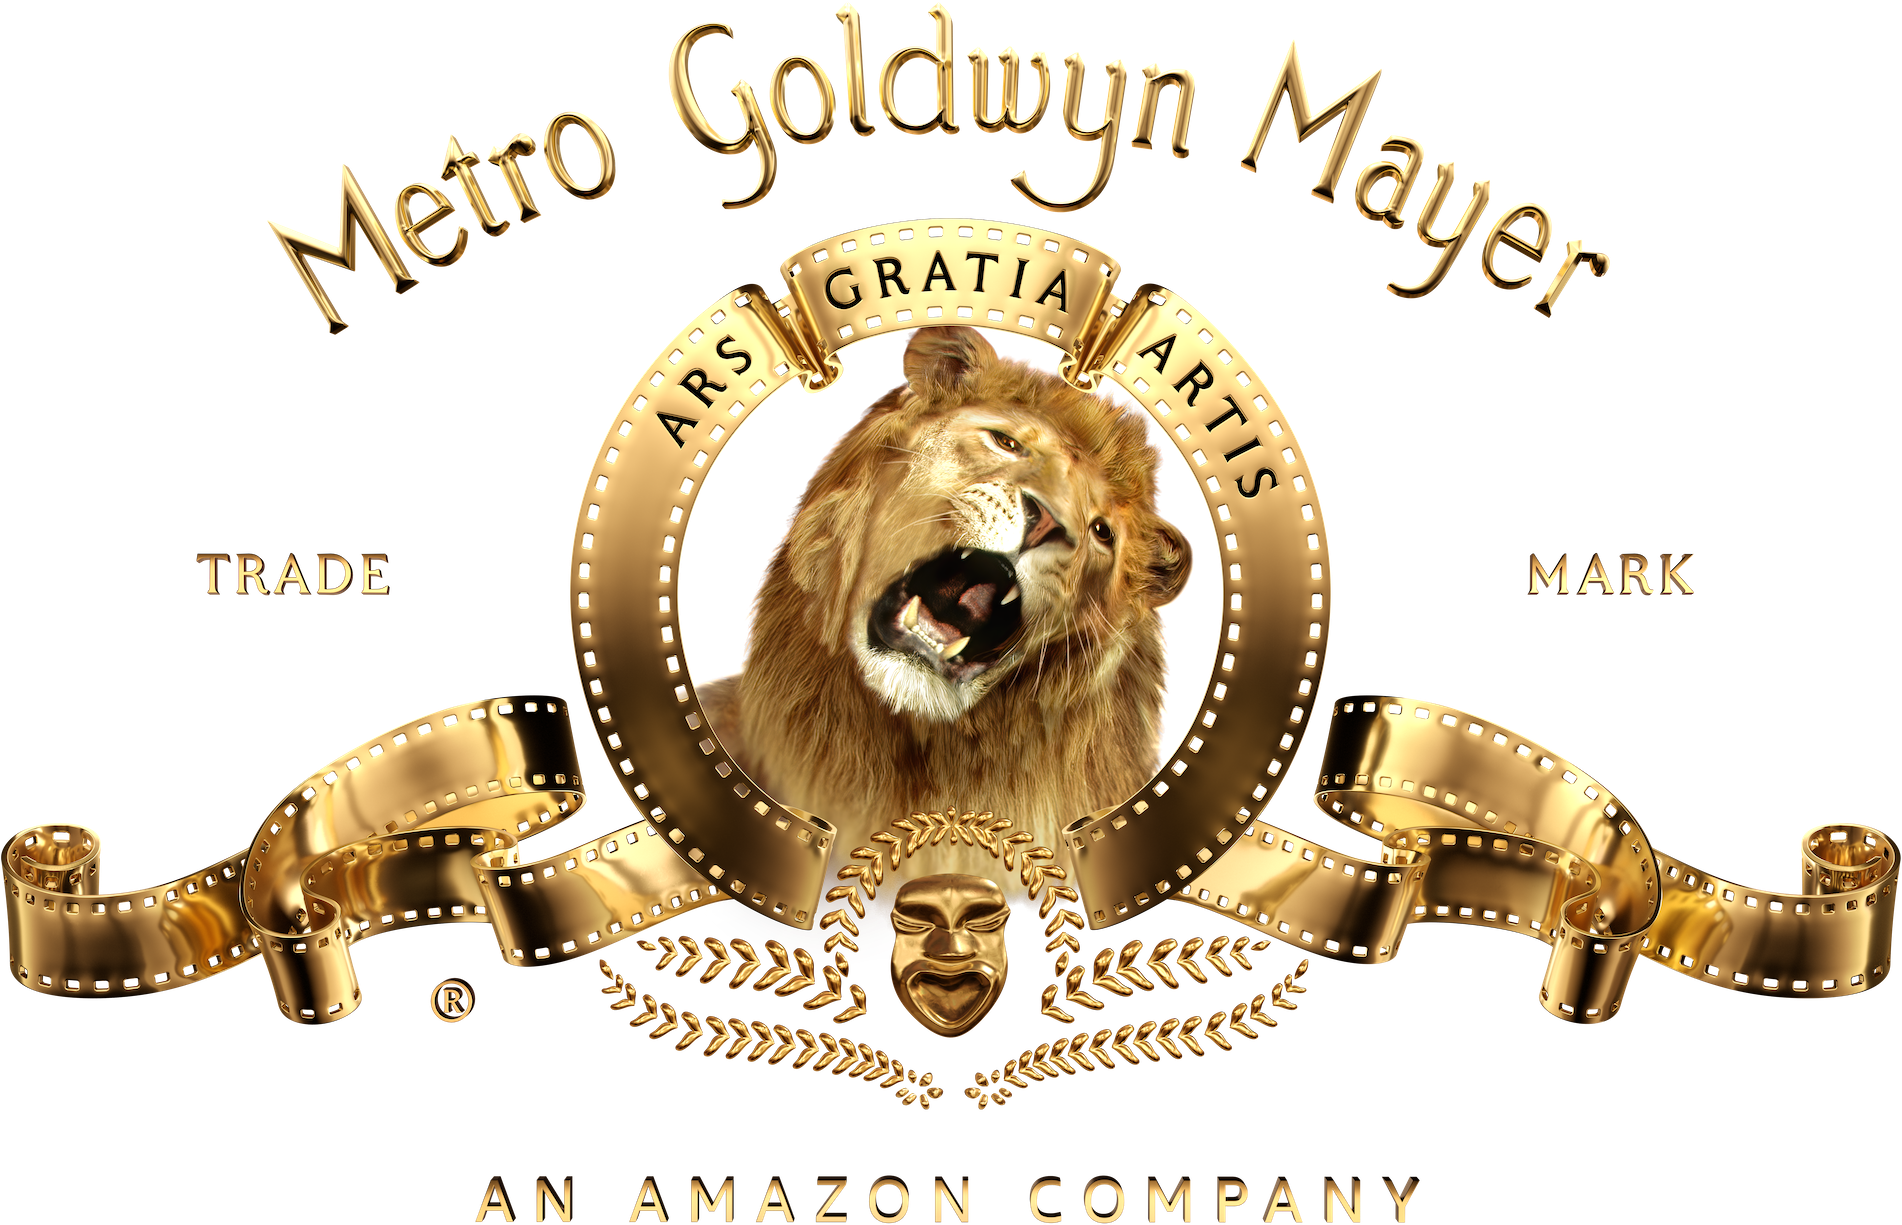 Metro-Goldwyn-Mayer - company